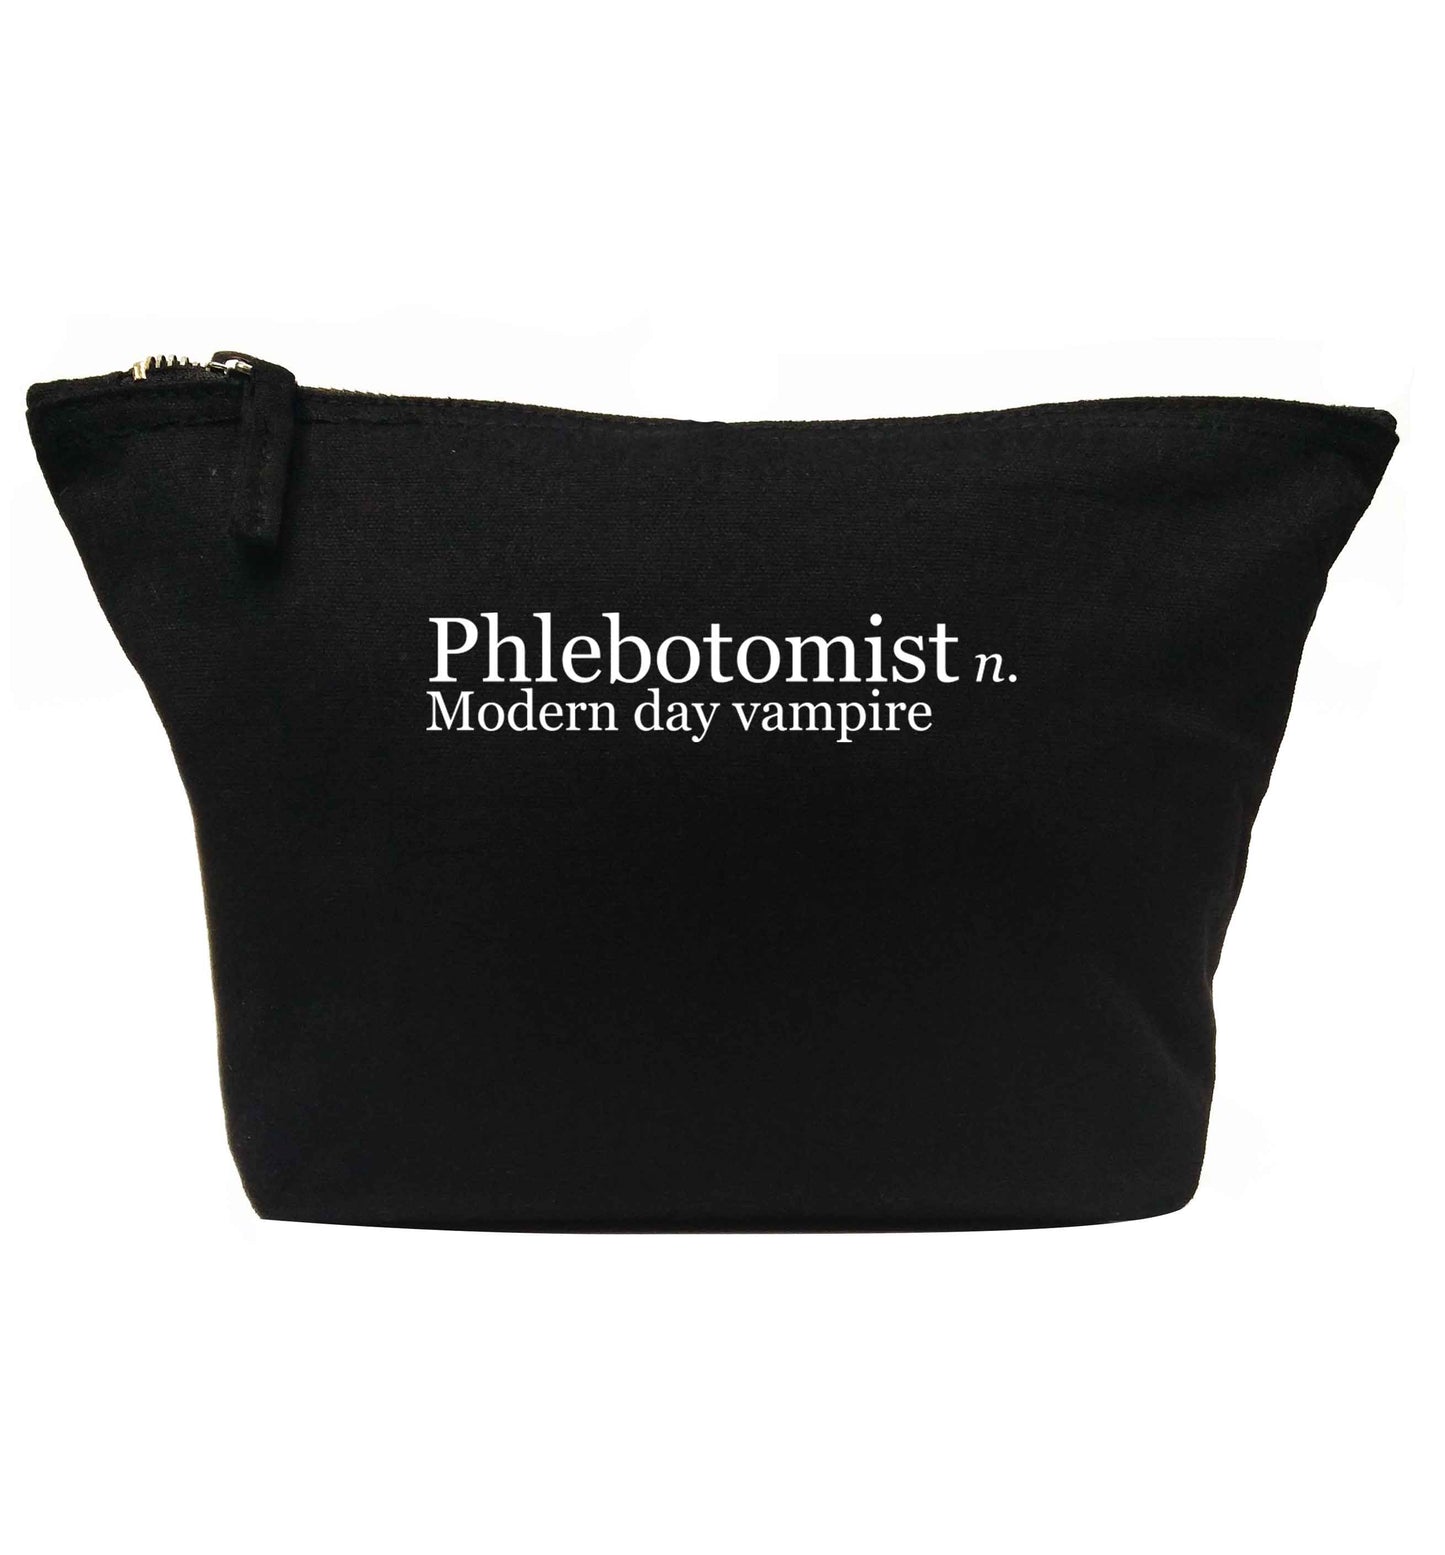 Phlebotomist - Modern day vampire | Makeup / wash bag